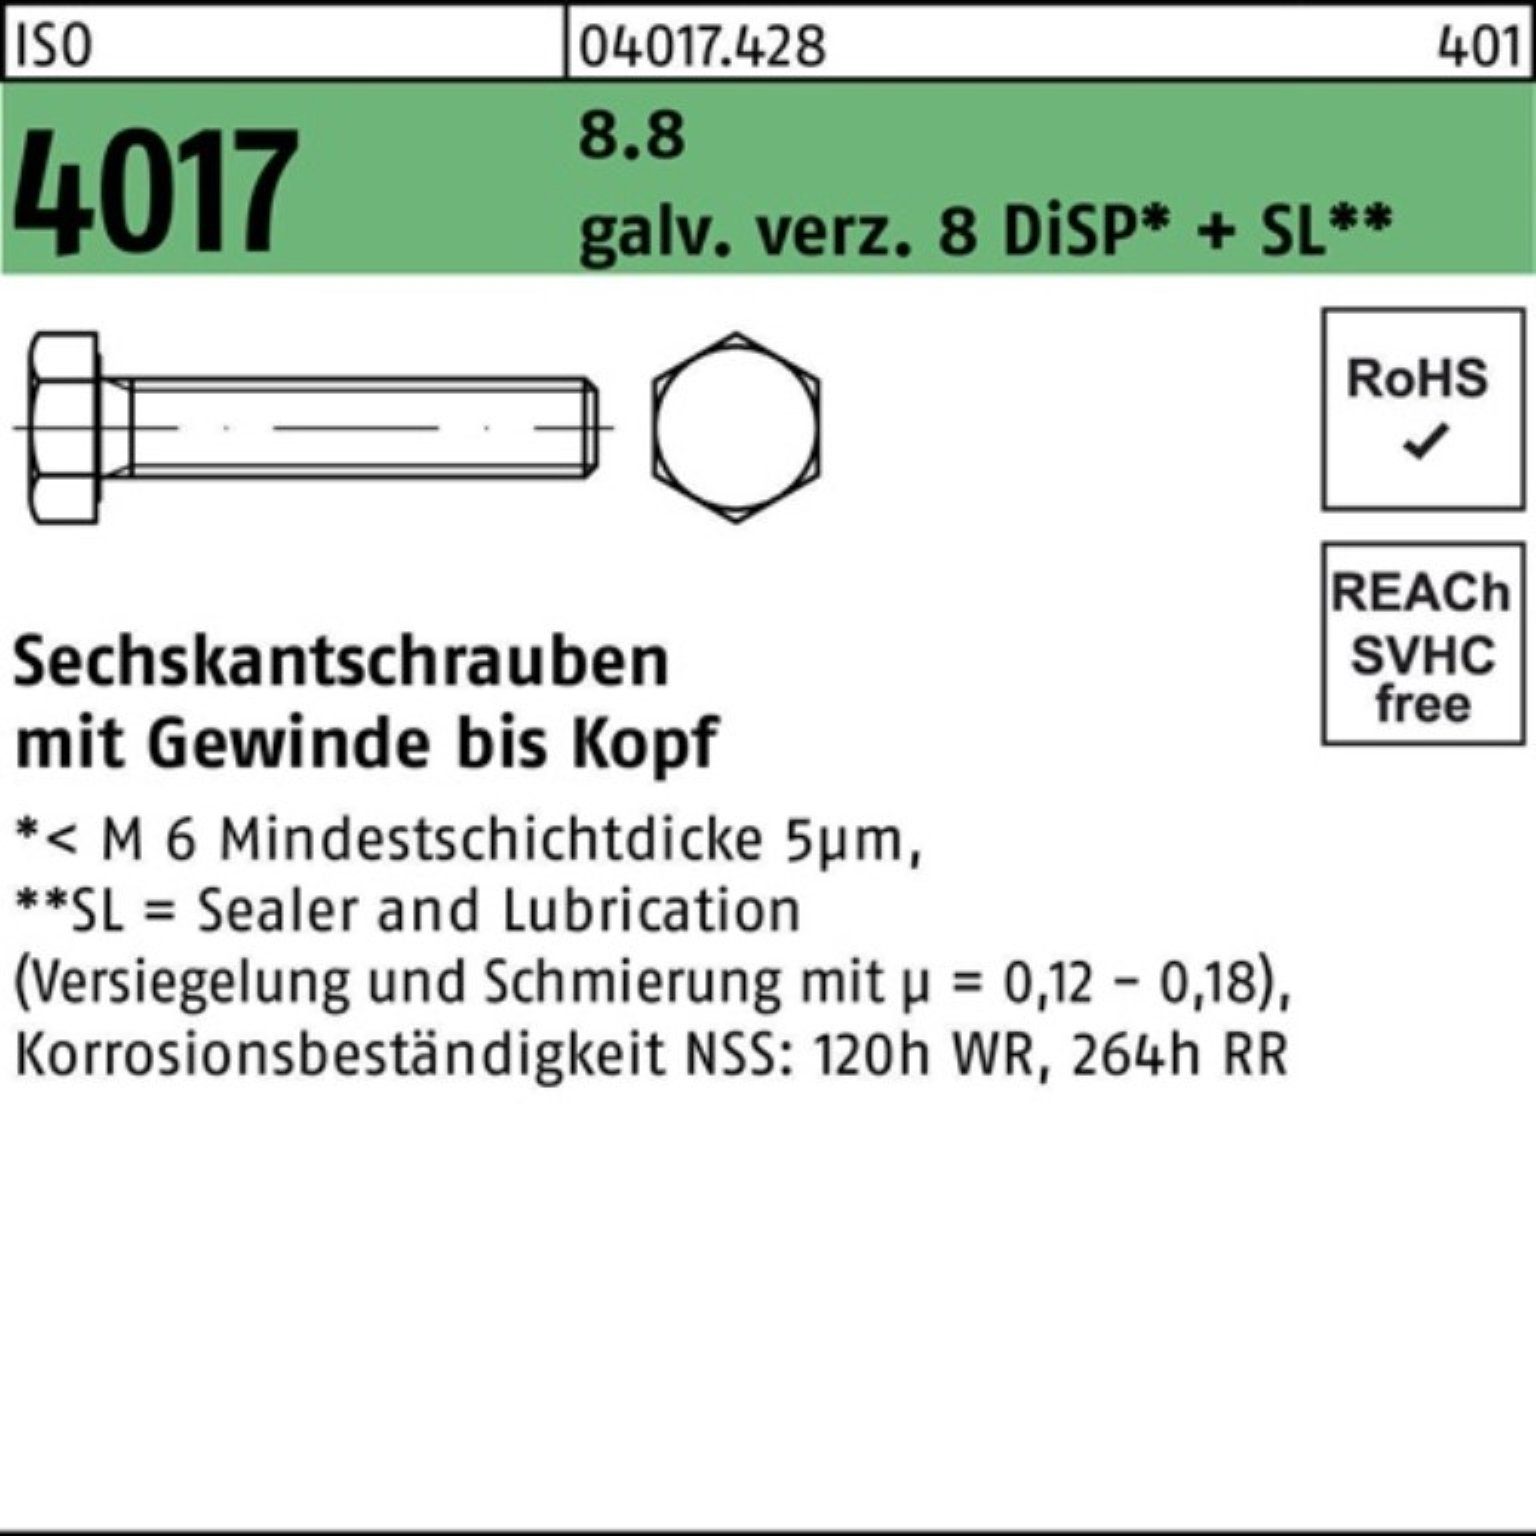 VG 100er Sechskantschraube ISO galv.verz. Bufab 8 M12x DiS 8.8 4017 Sechskantschraube 220 Pack